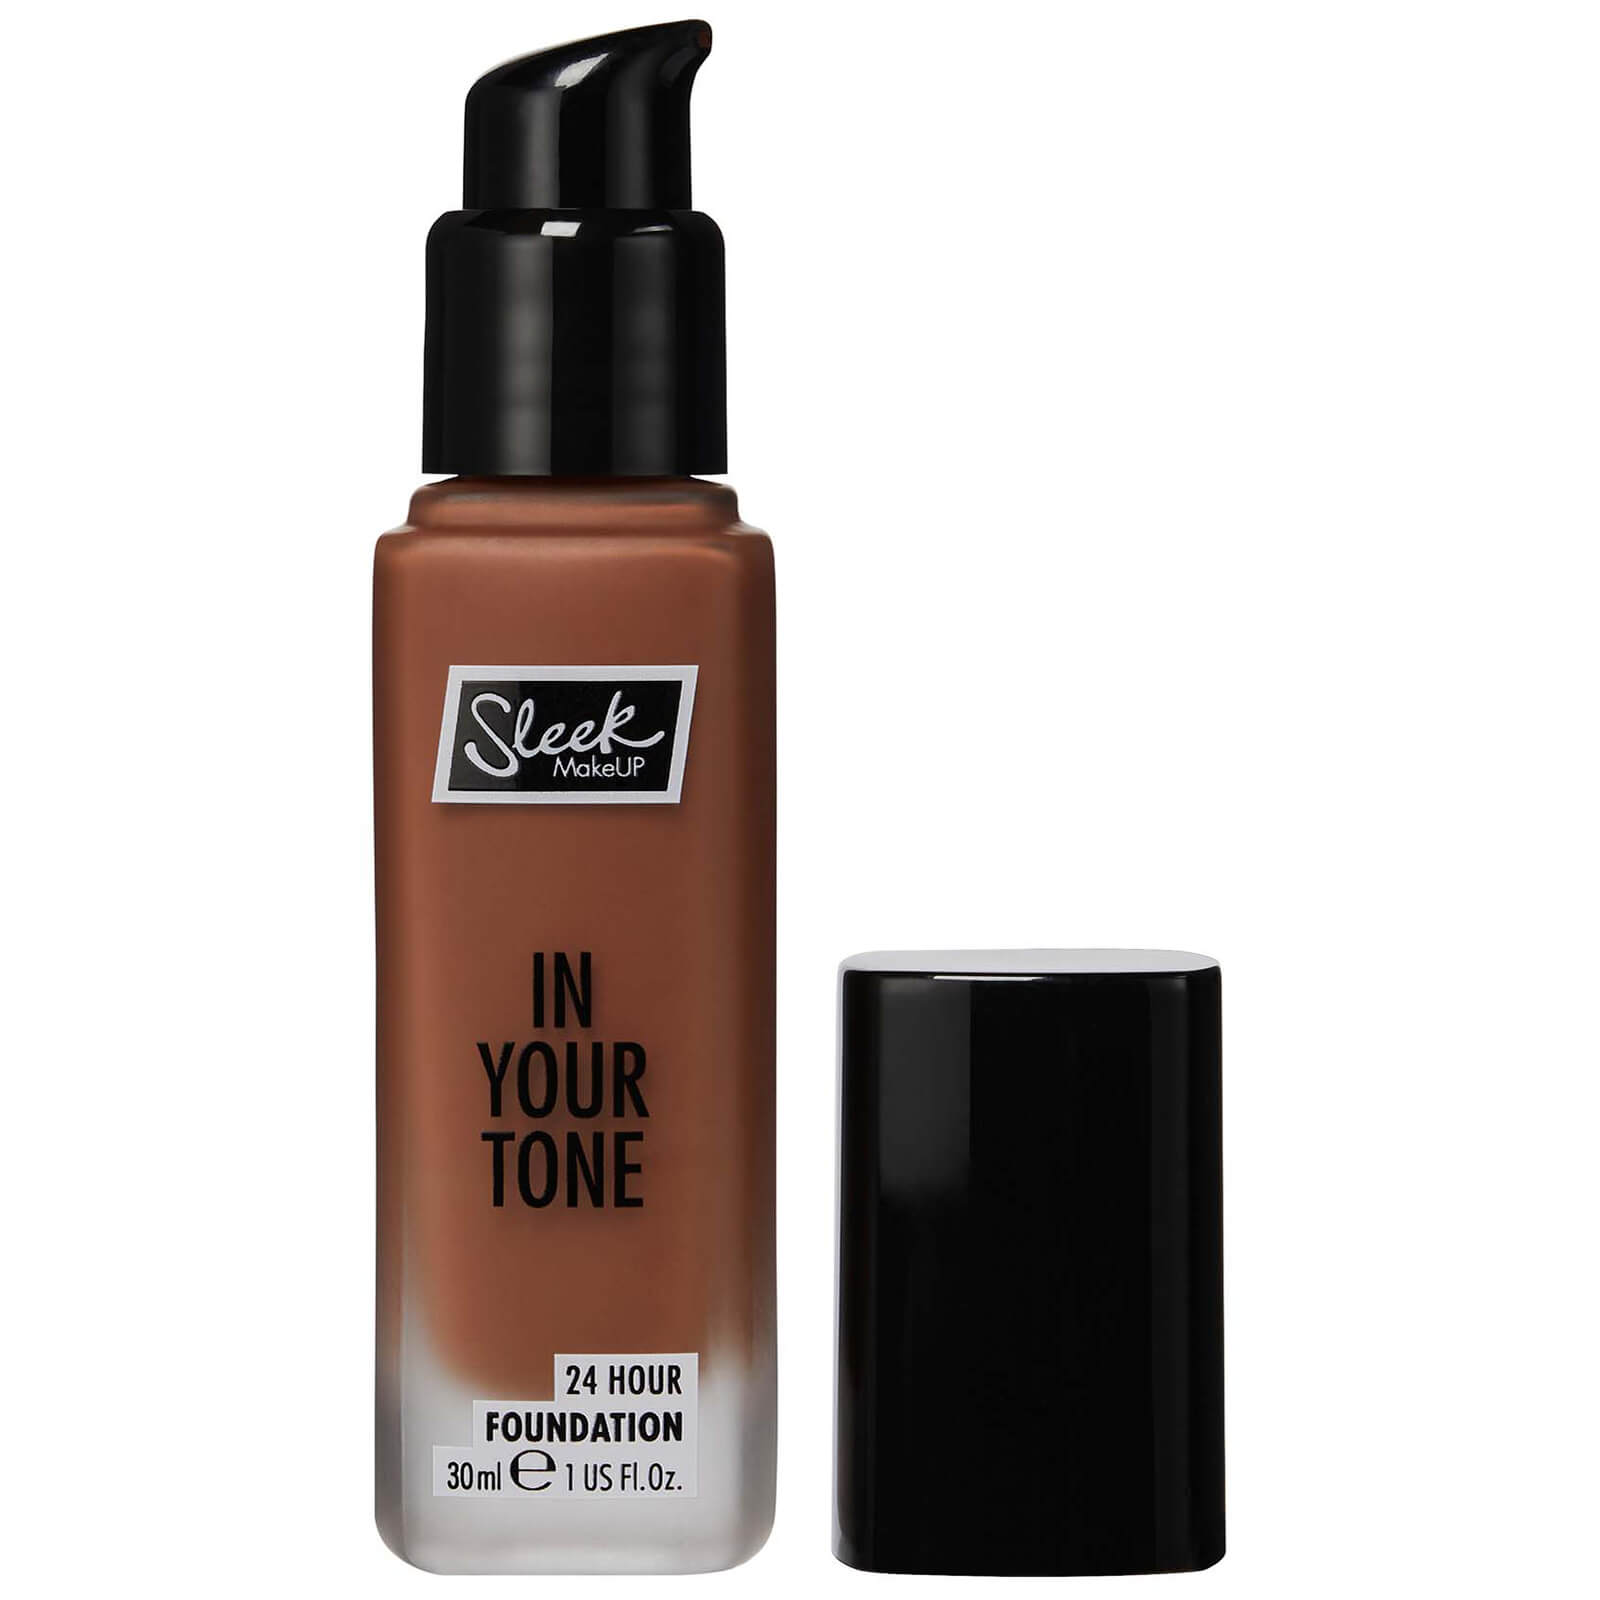 Sleek MakeUP in Your Tone 24 Hour Foundation 30ml (Various Shades) - 10C von Sleek MakeUP